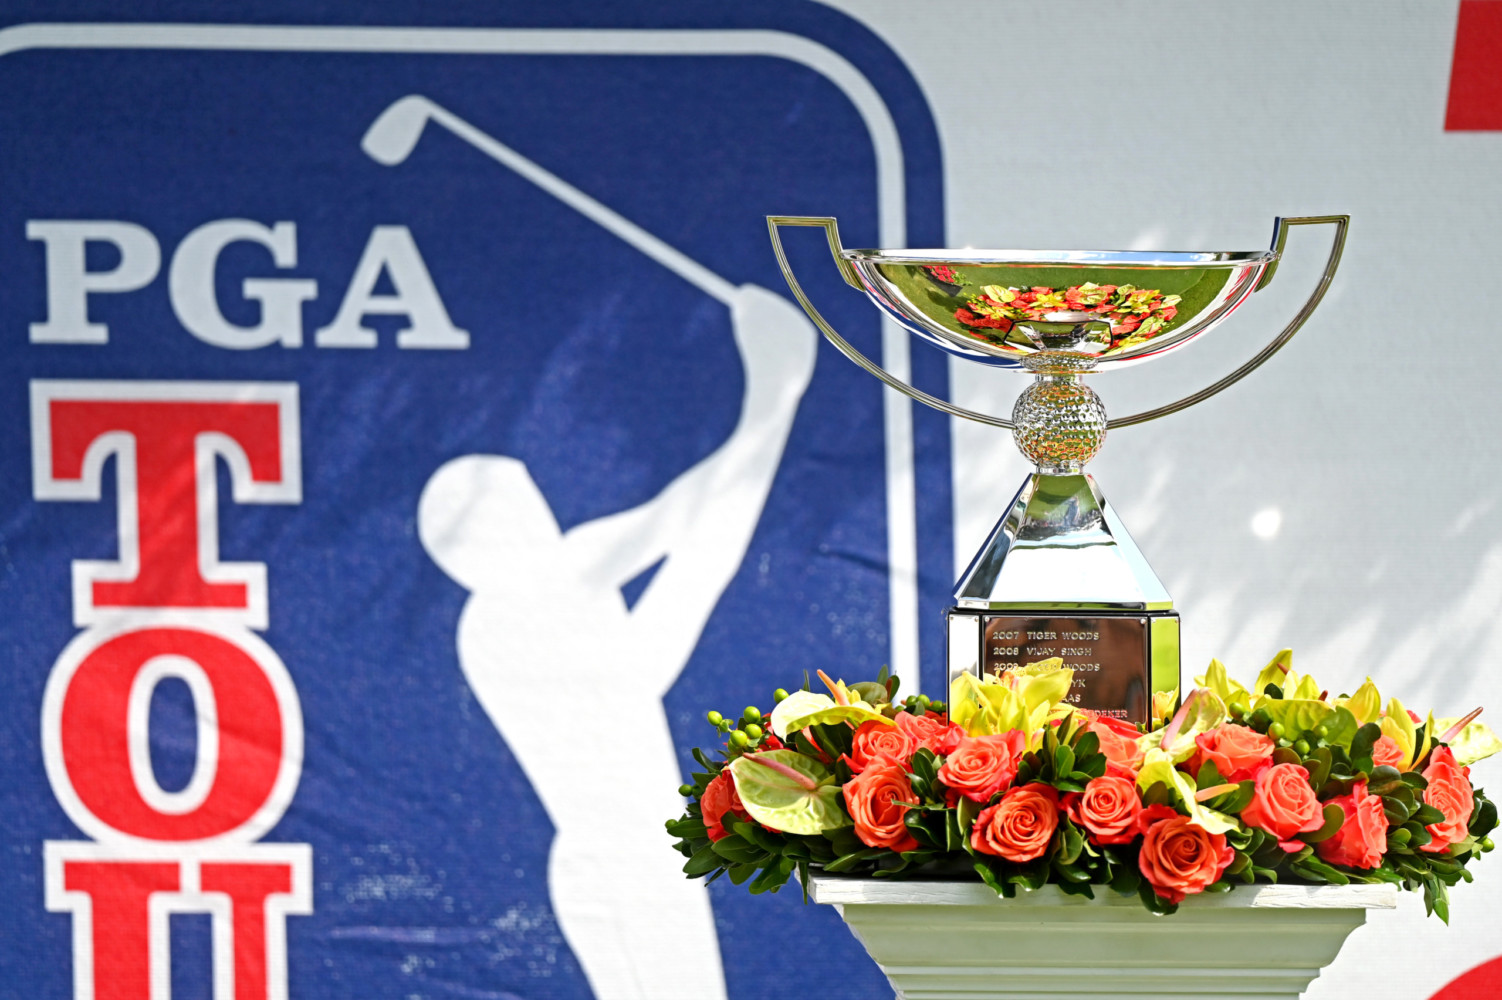 PGA-tour-logo-and-trophy